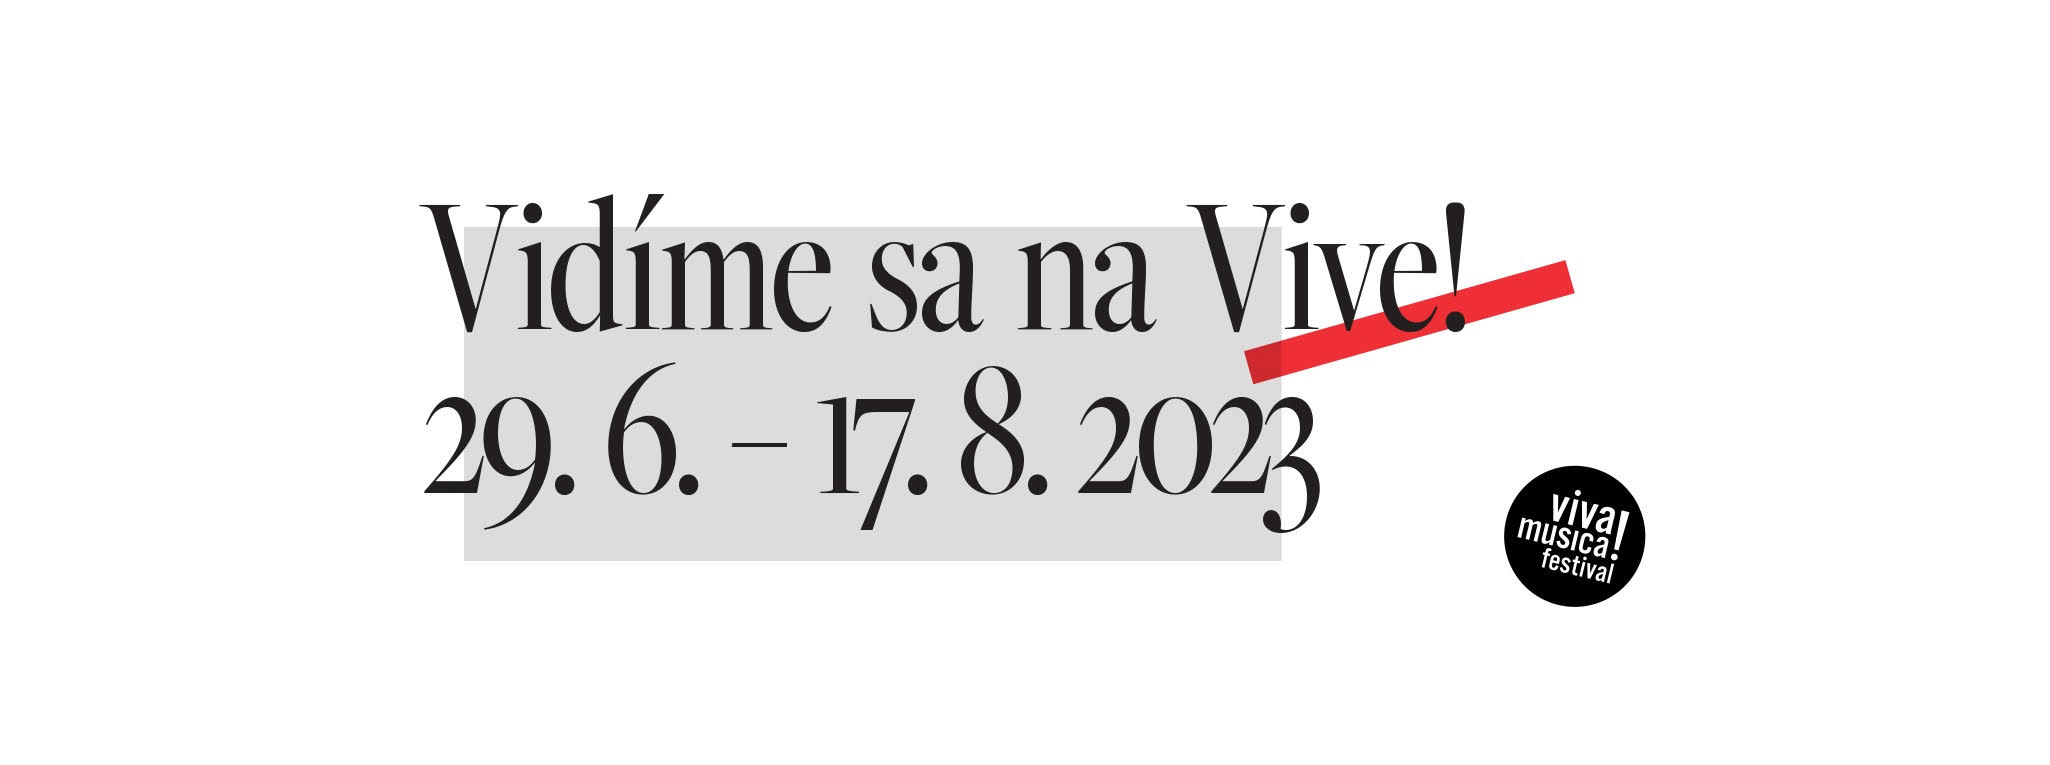 Viva Musica! festival 2023 | kamdomesta.sk